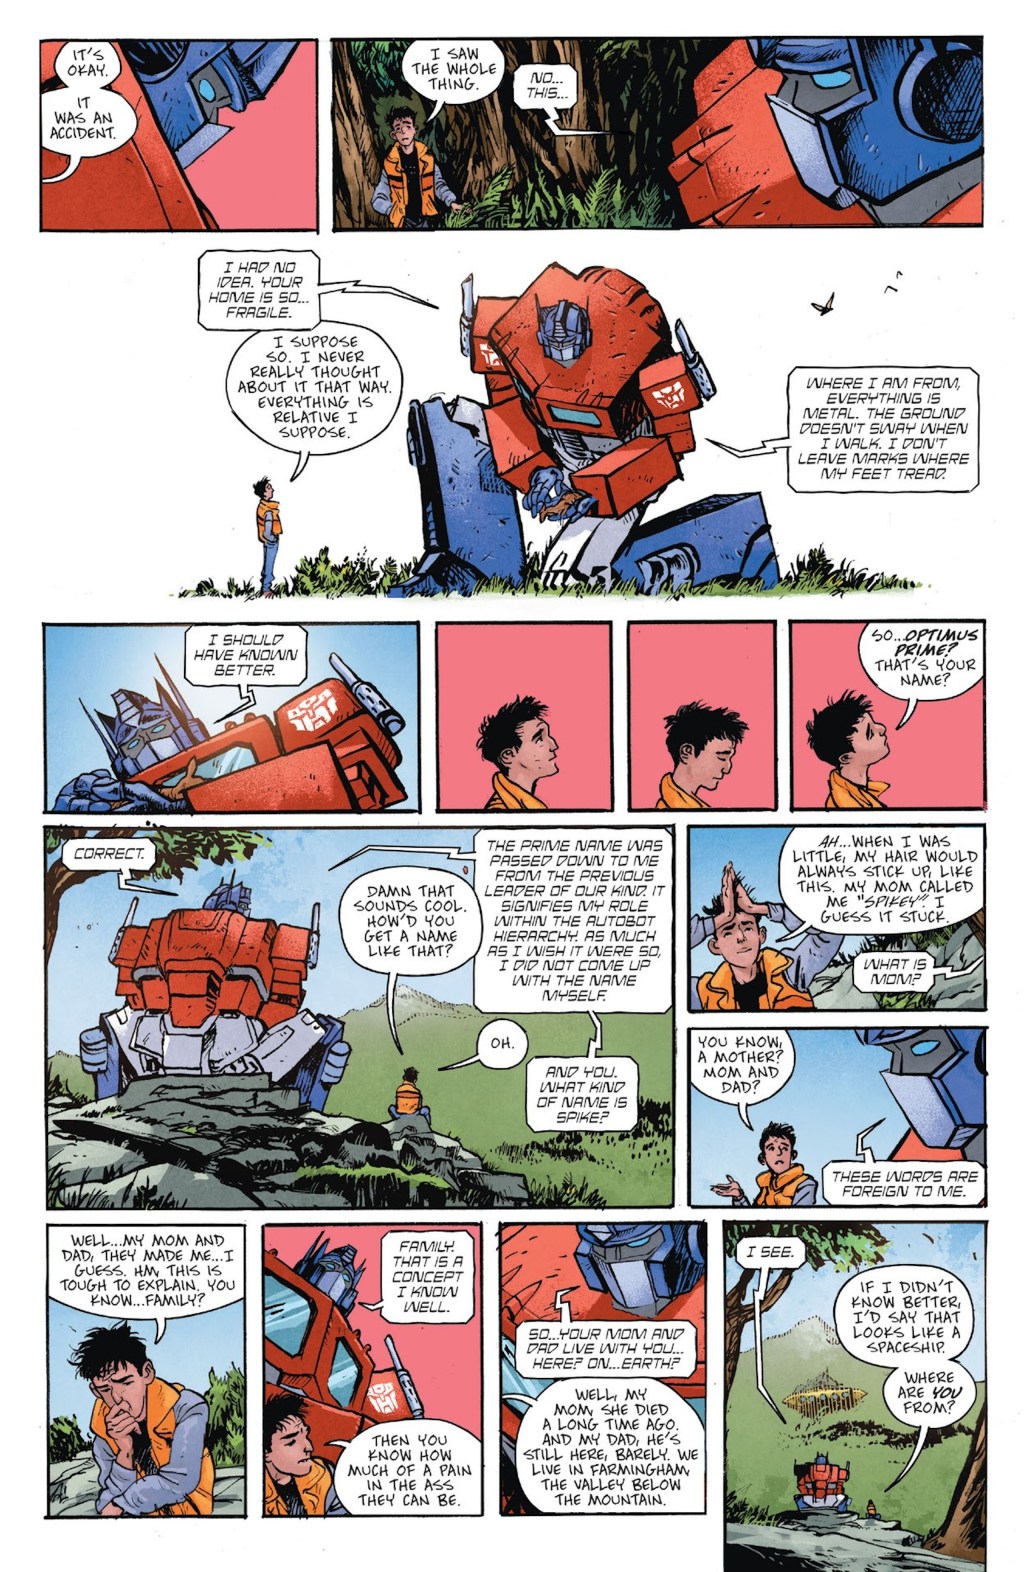 Transformers Issue #2 (2023), Skybound Entertainment. Words by Daniel Warren Johnson. Art by Daniel Warren Johnson and Mike Spicer.